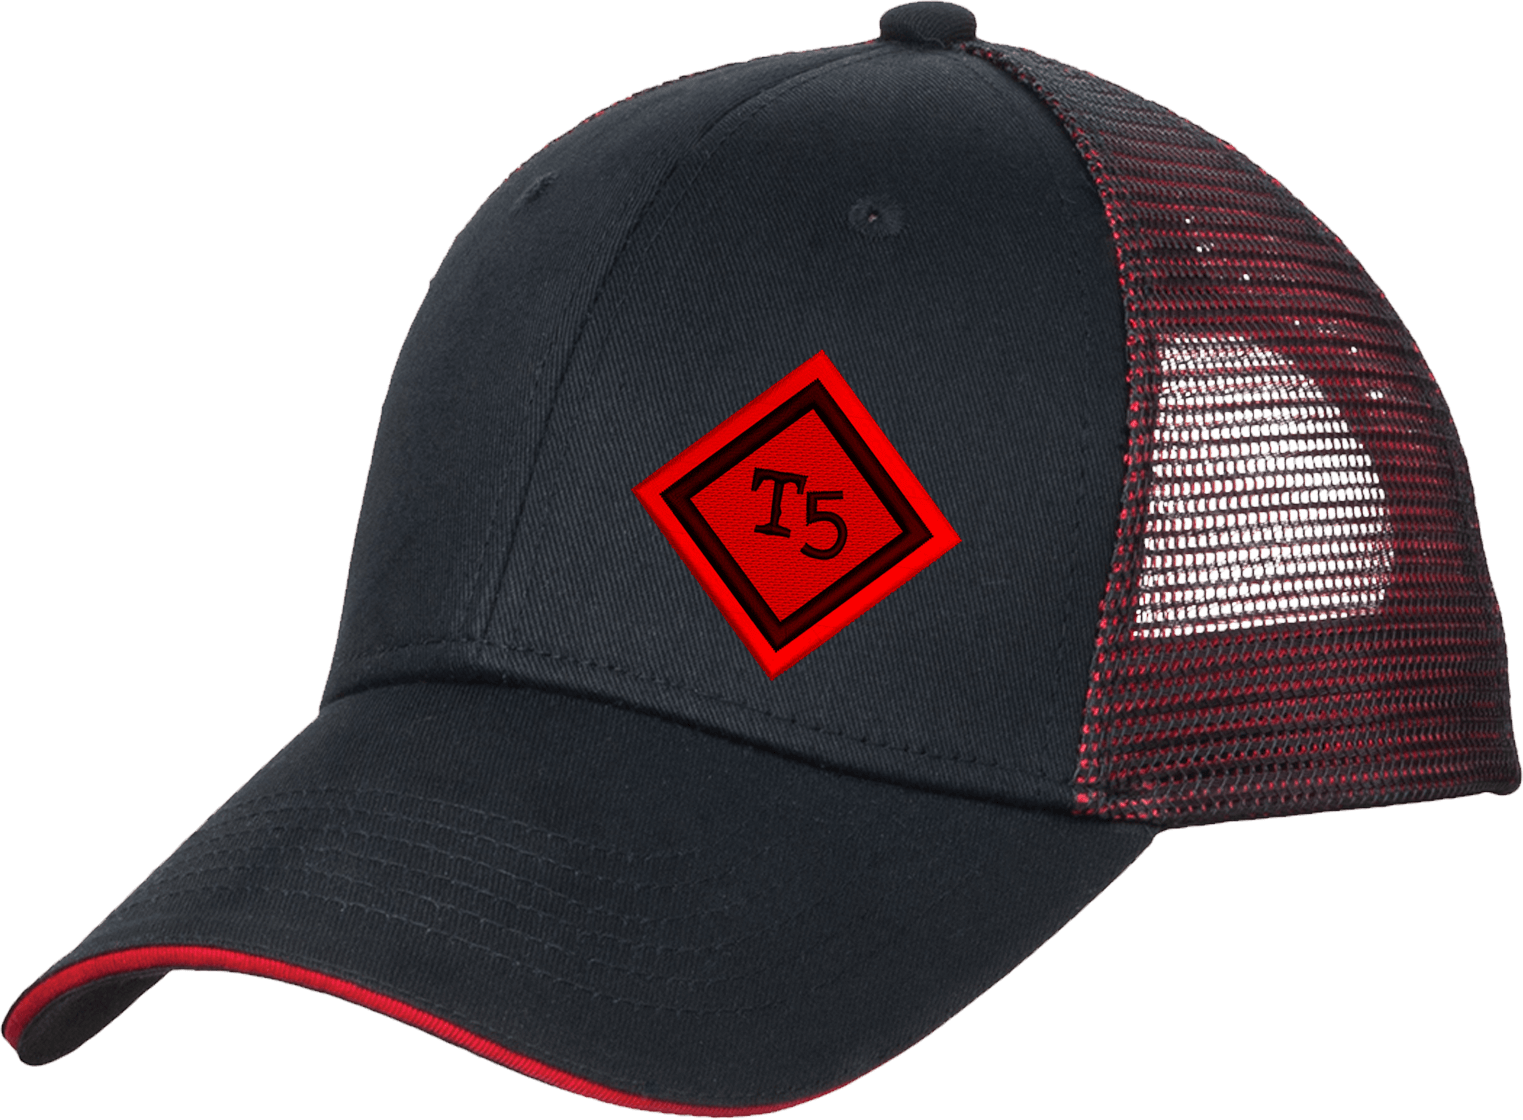 Team 5 diamond hat black / red side view